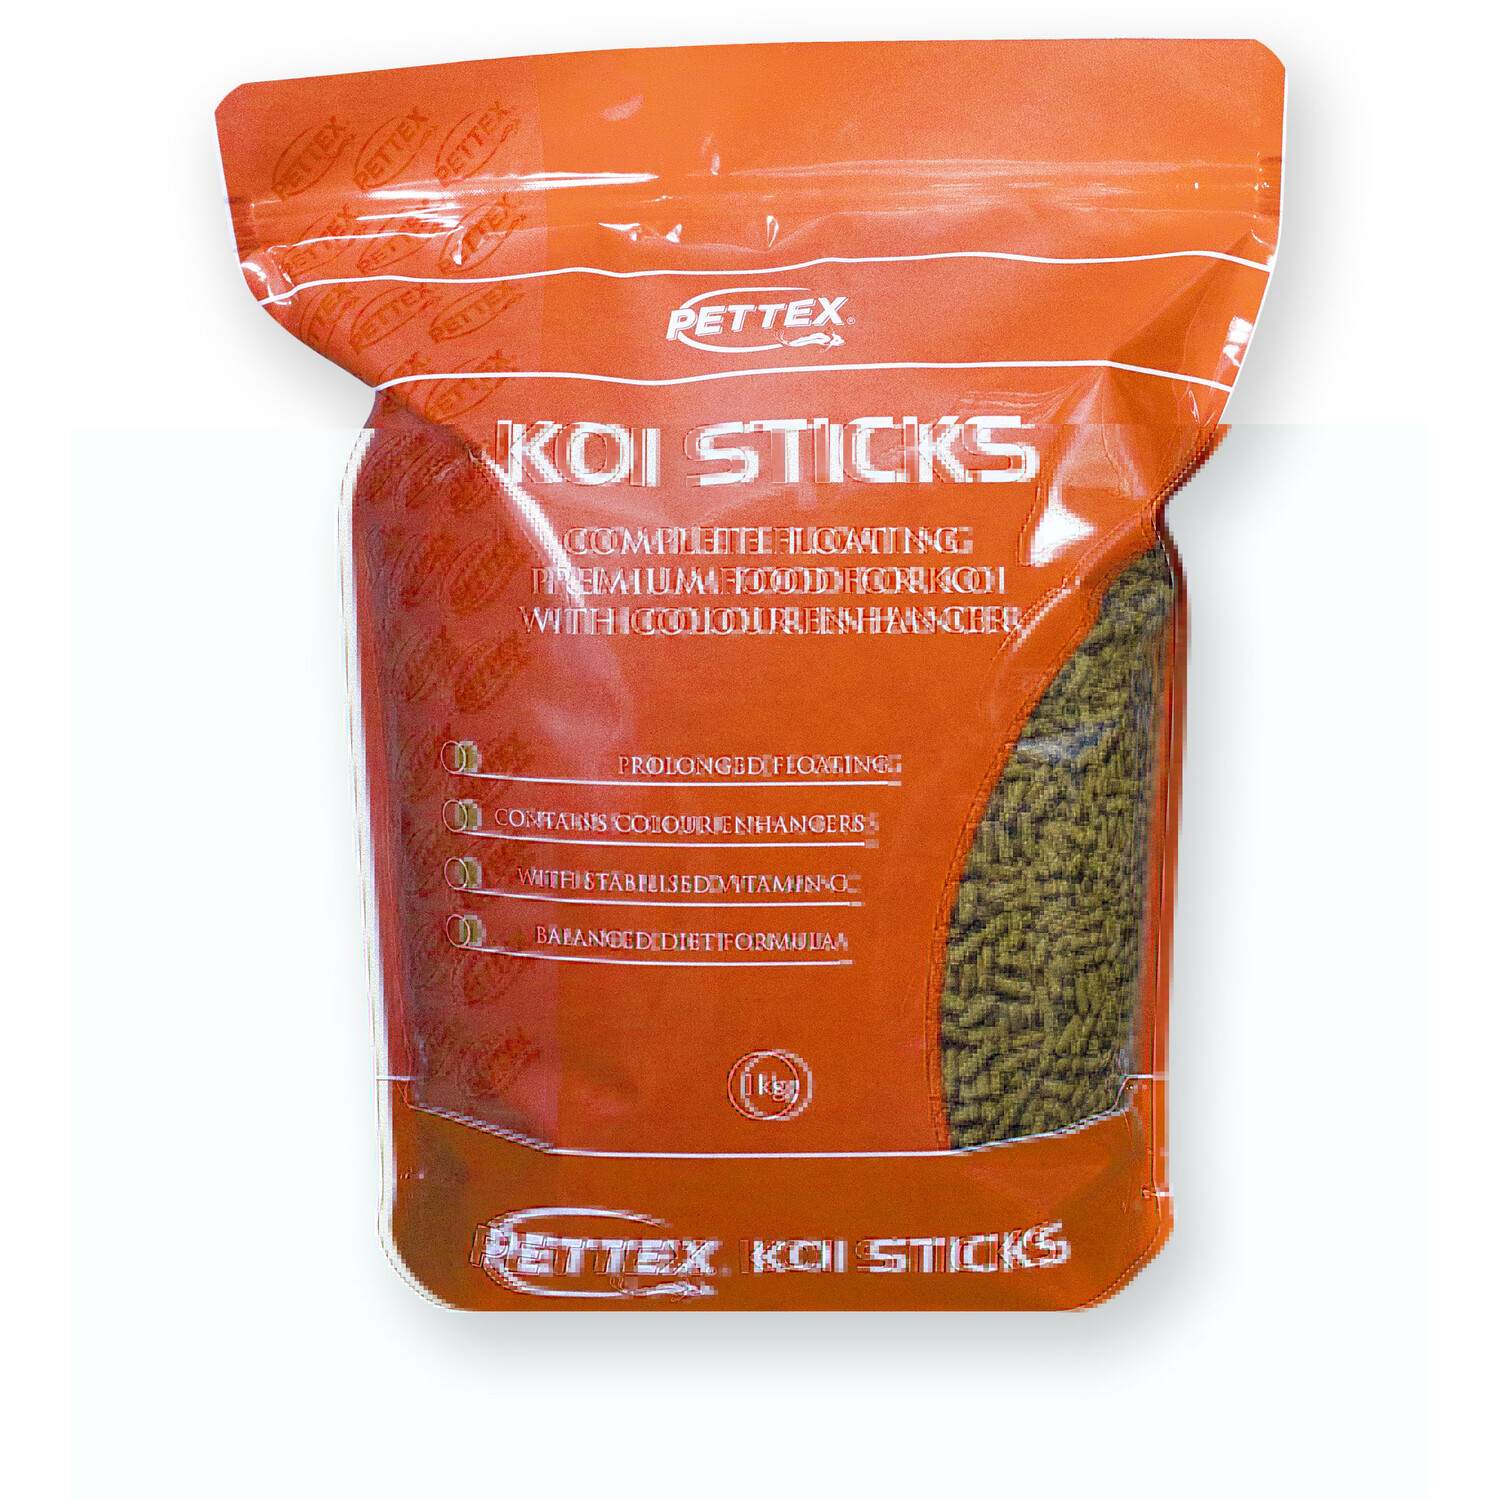 Pettex Koi Sticks Image 2